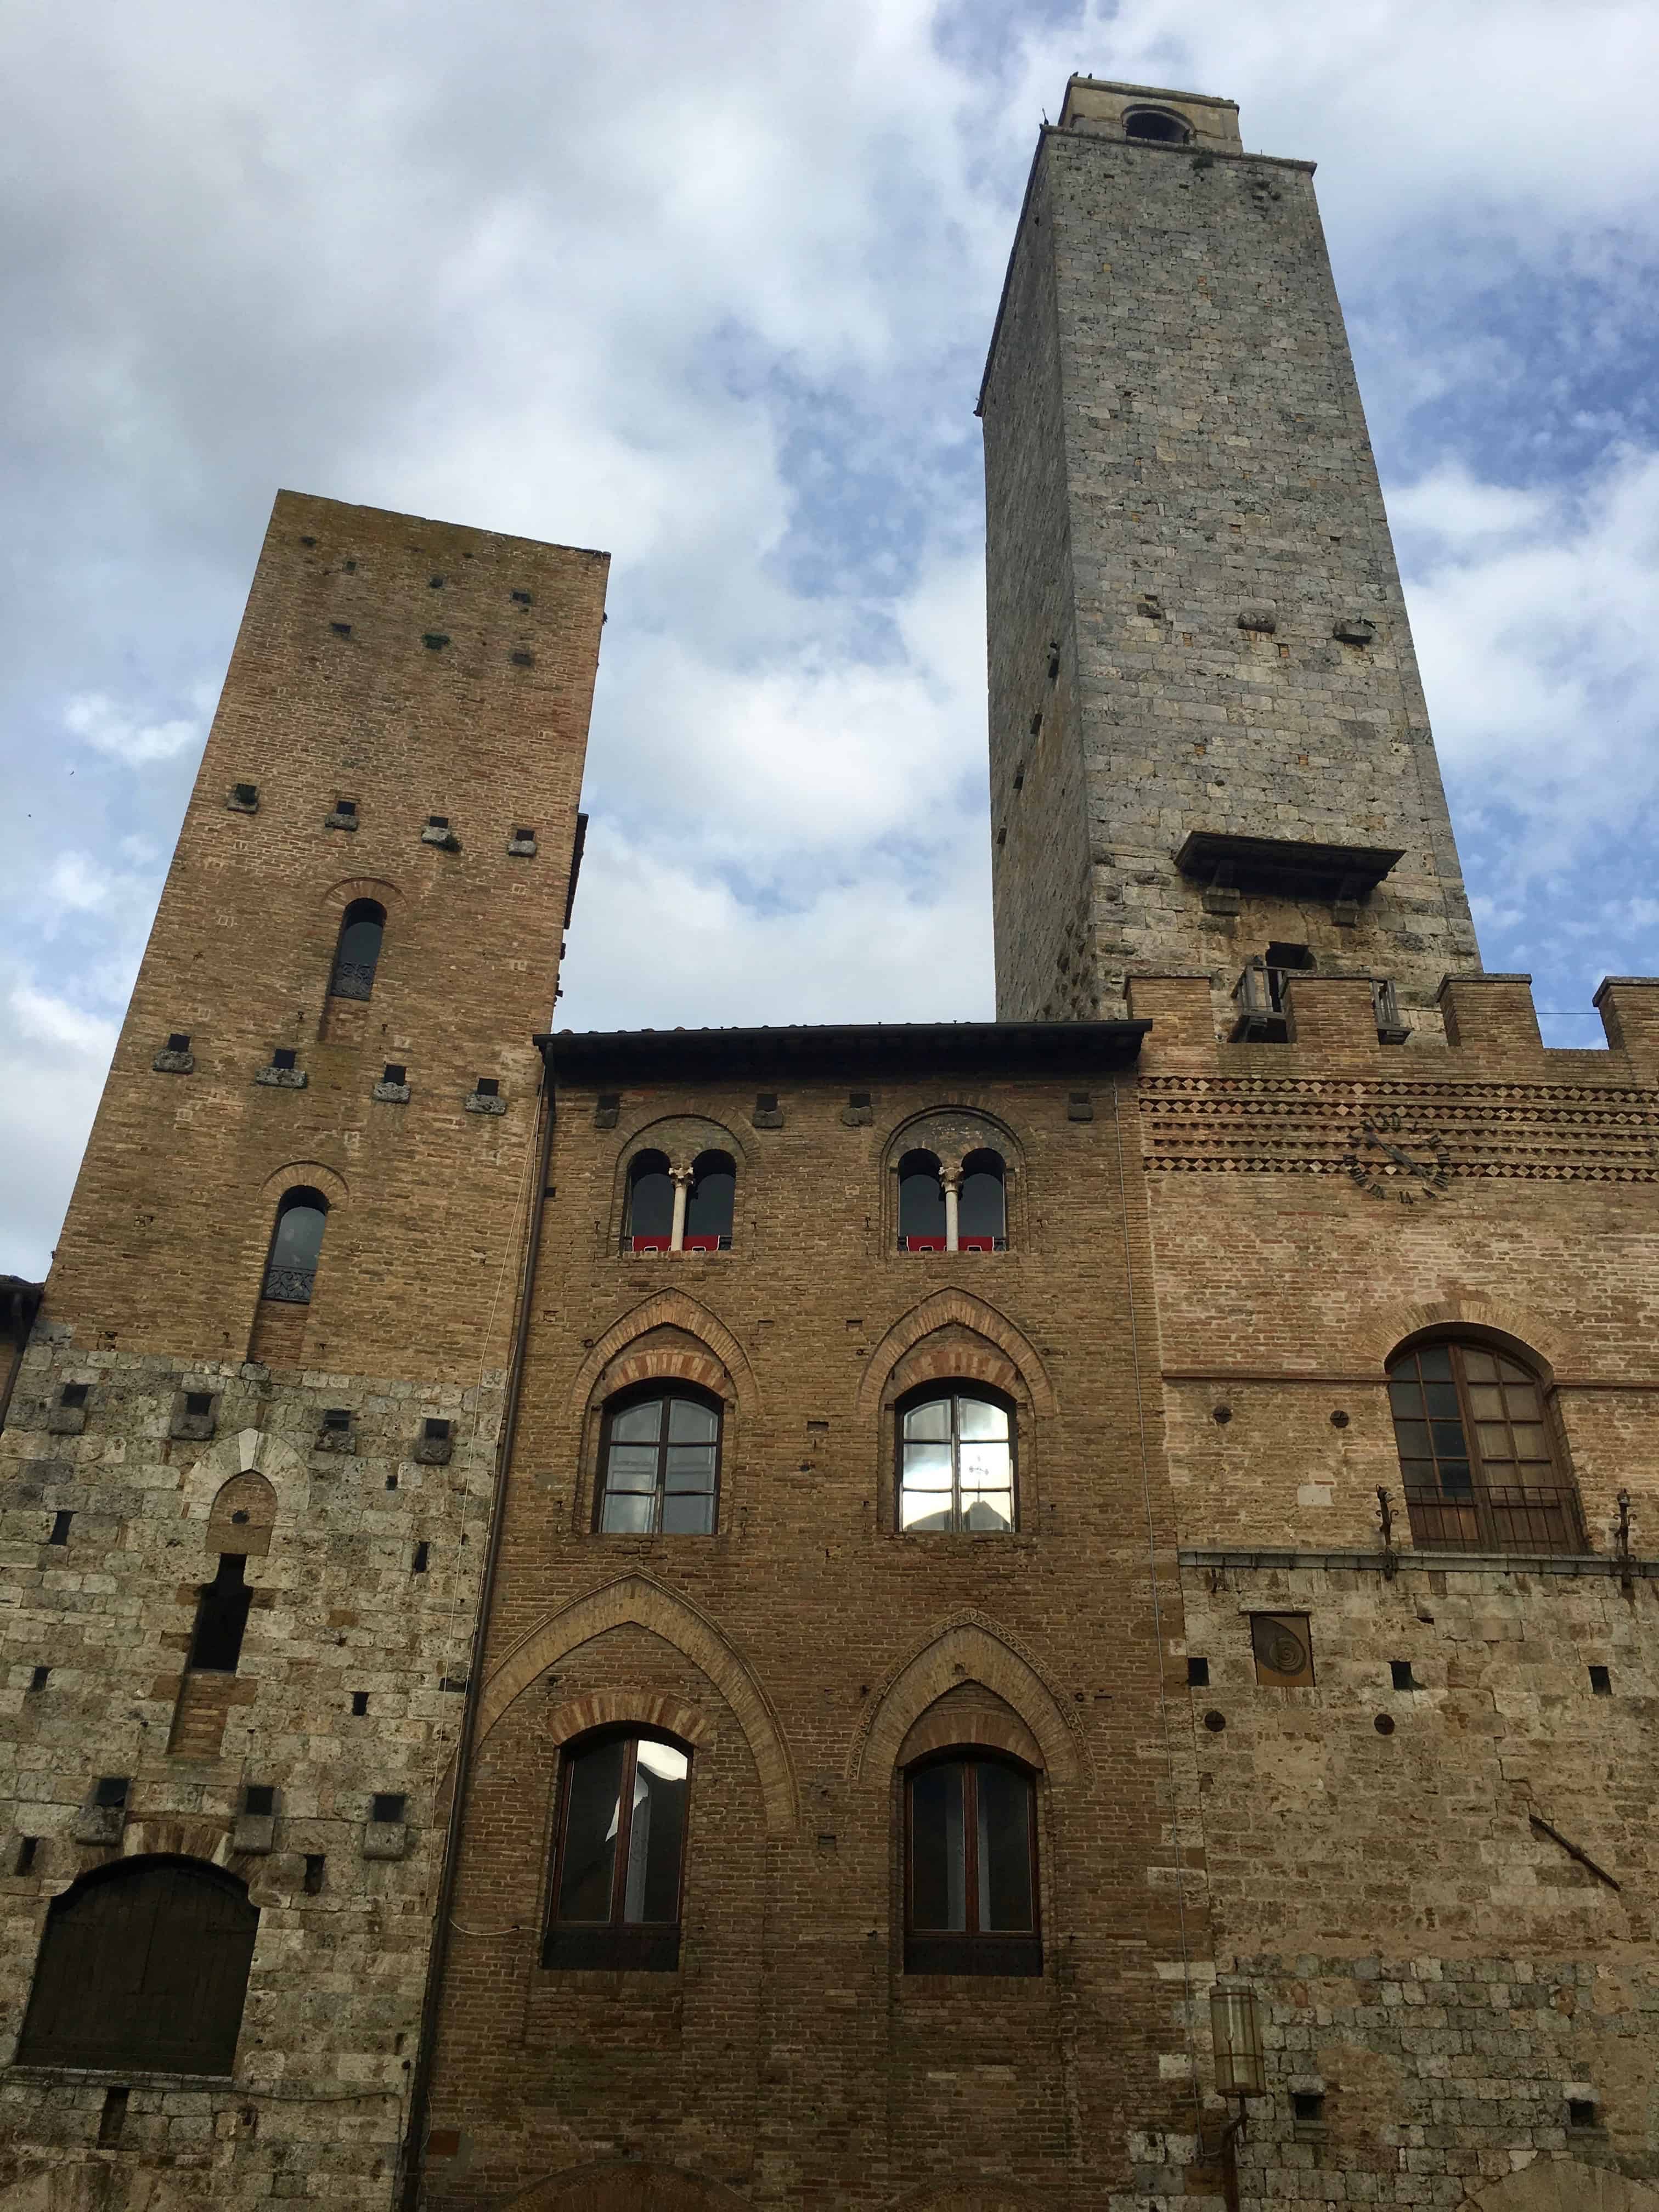 Towers of San Gimignano, Italy